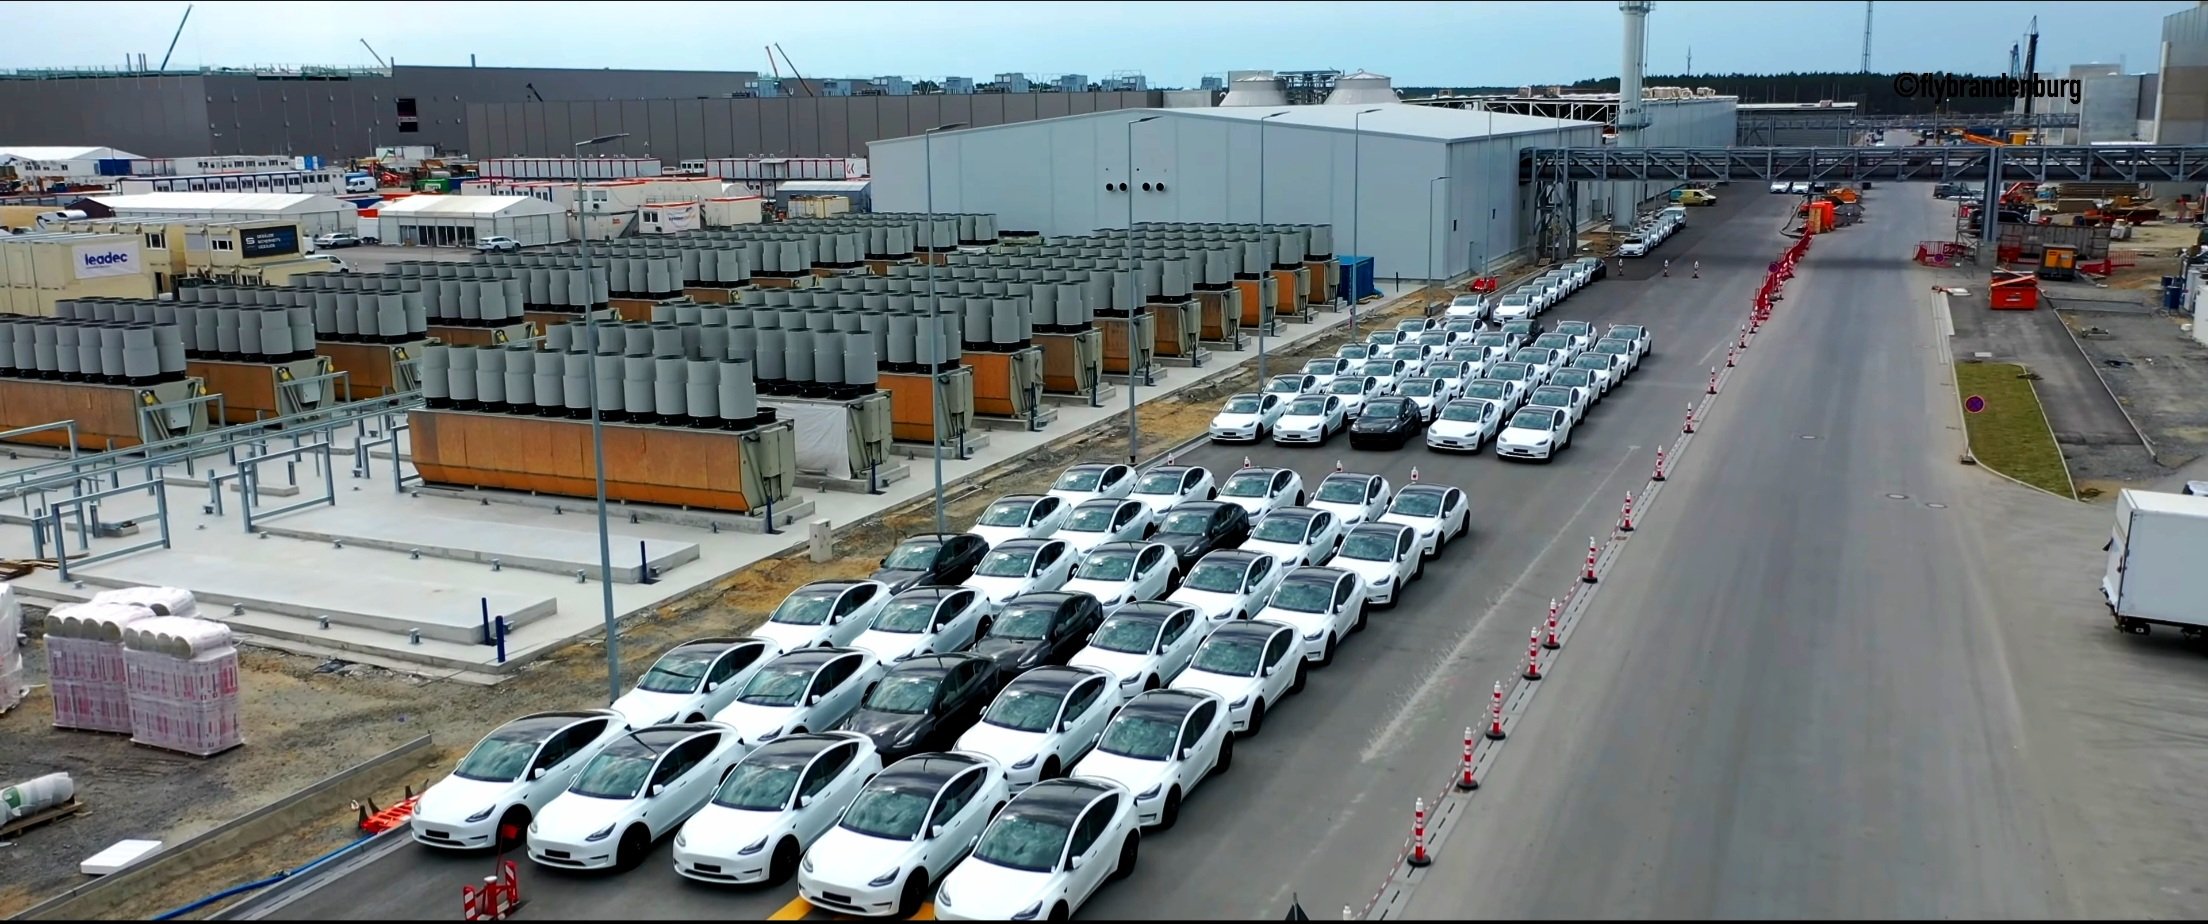 tesla-gigafactory-berlin-production-1000-vehicles-per-week